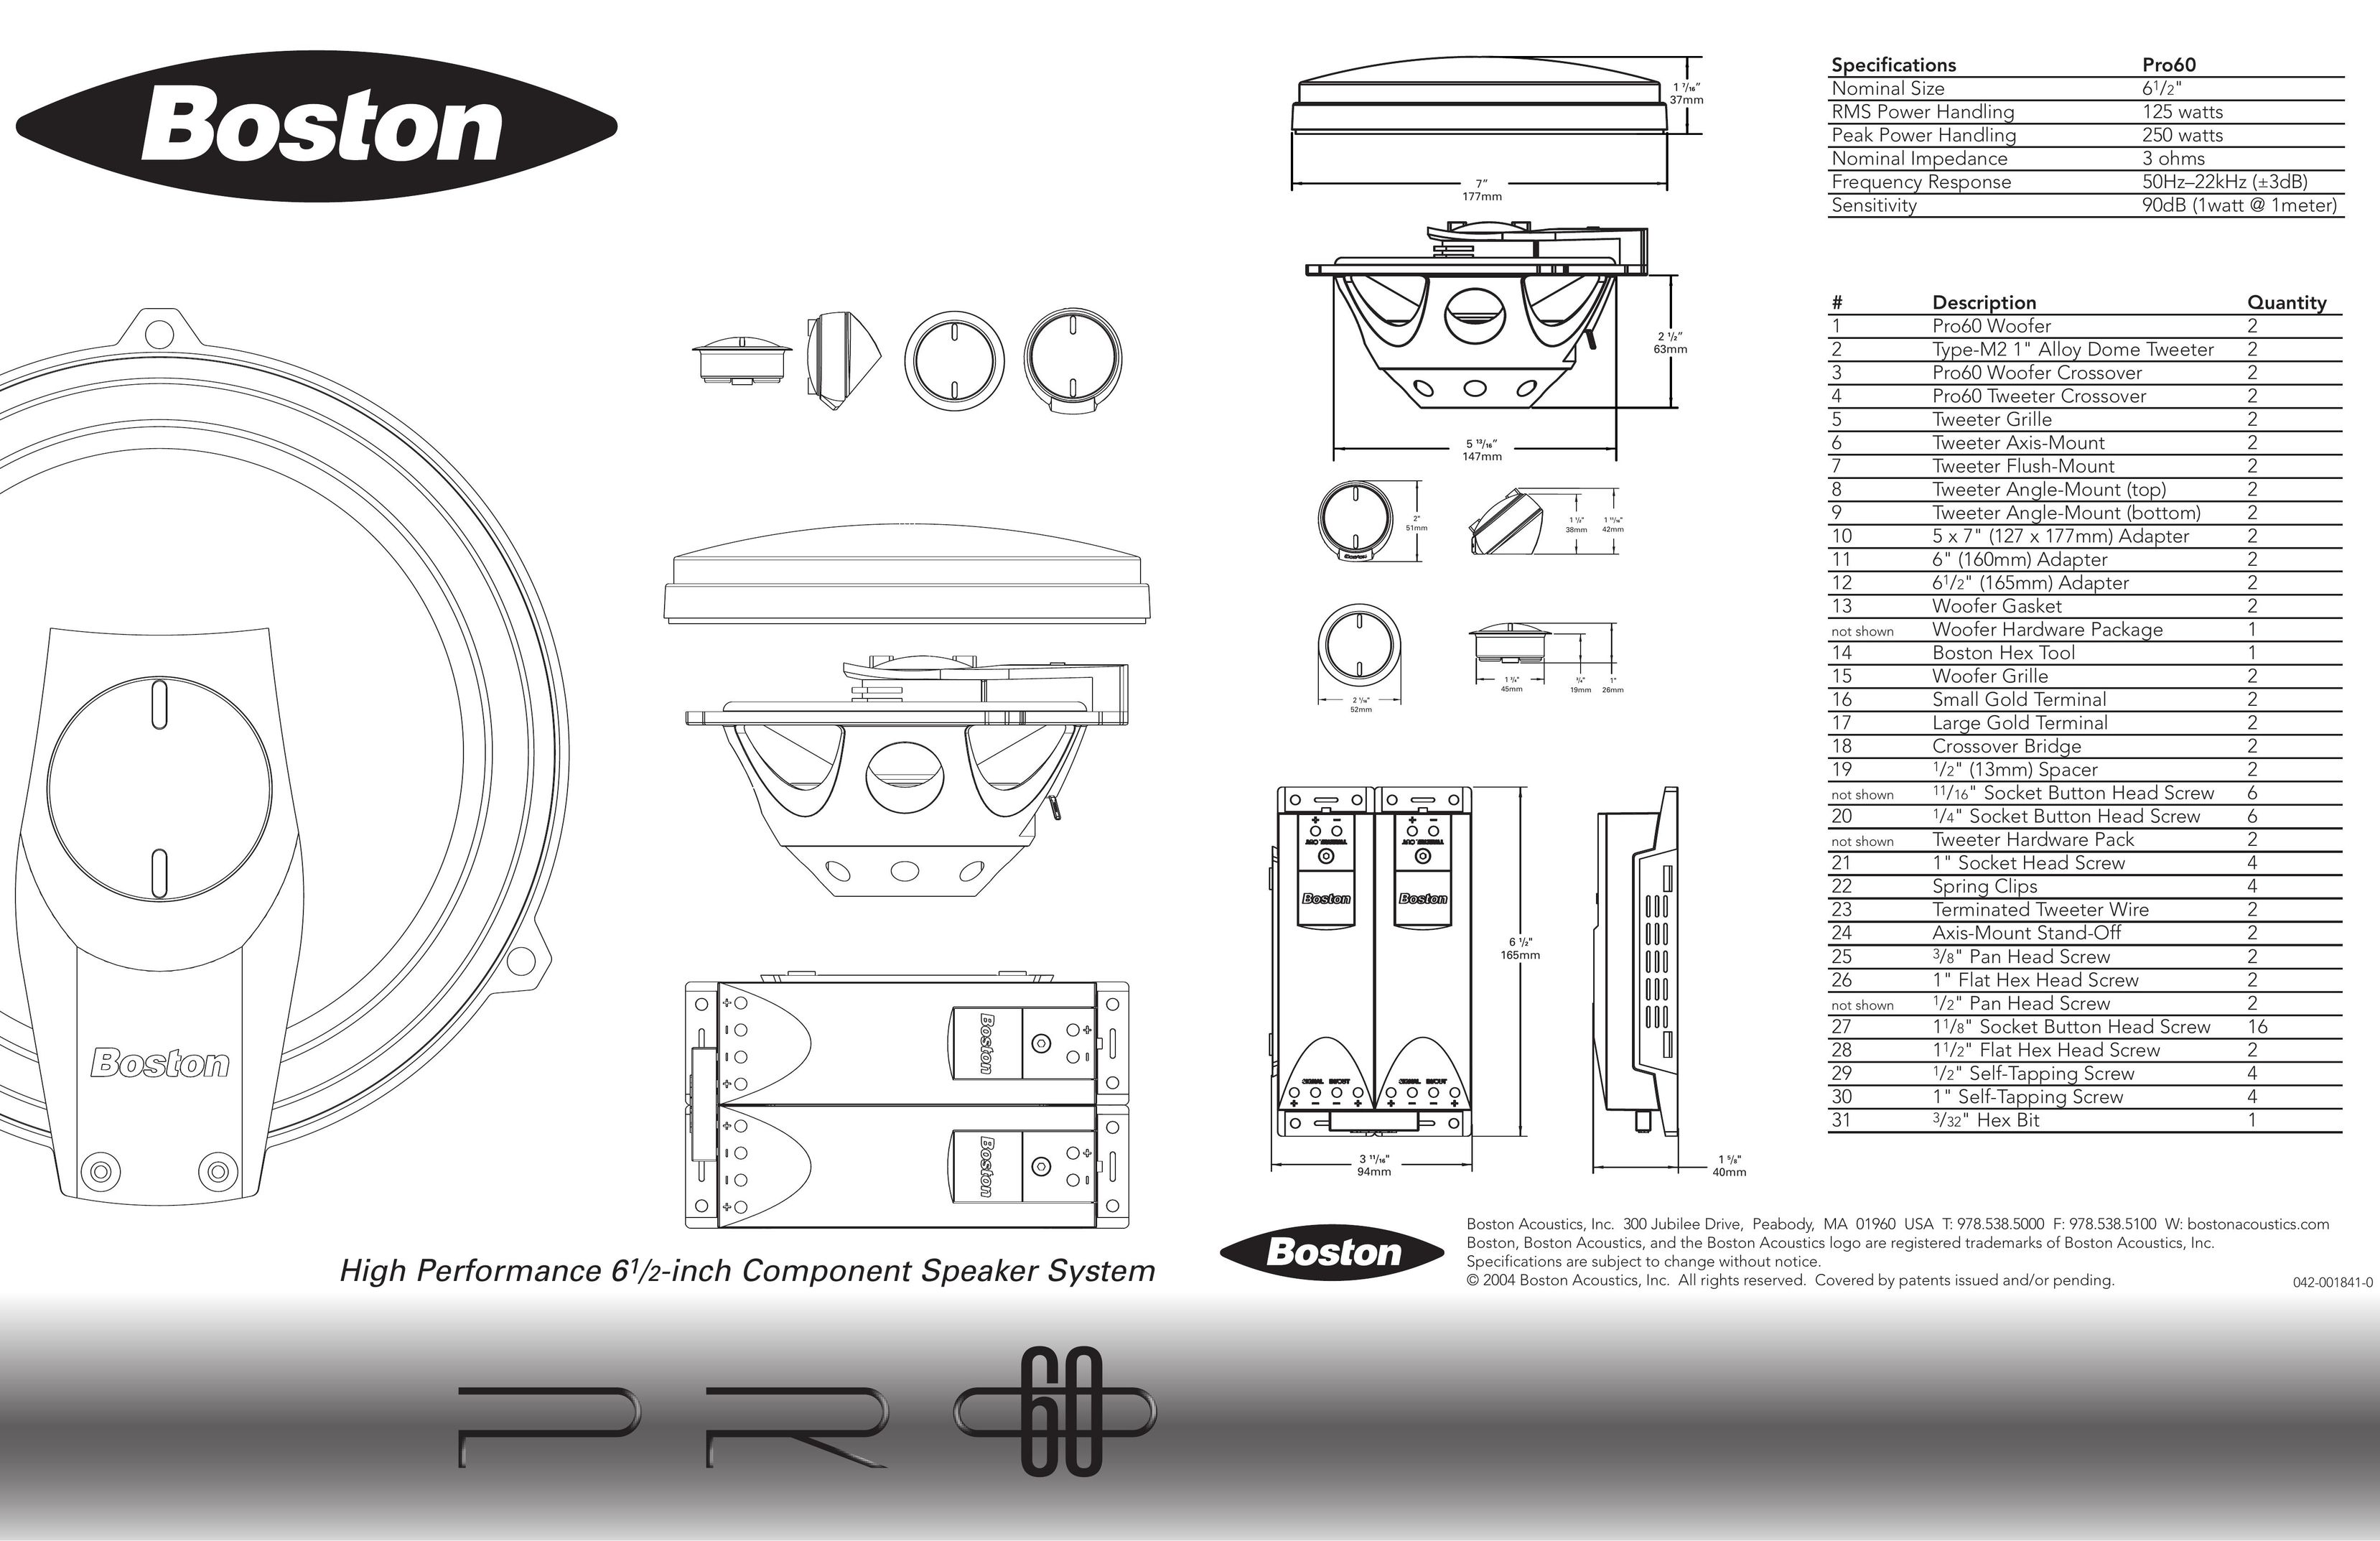 Boston Acoustics PRO60 Stereo Equalizer User Manual